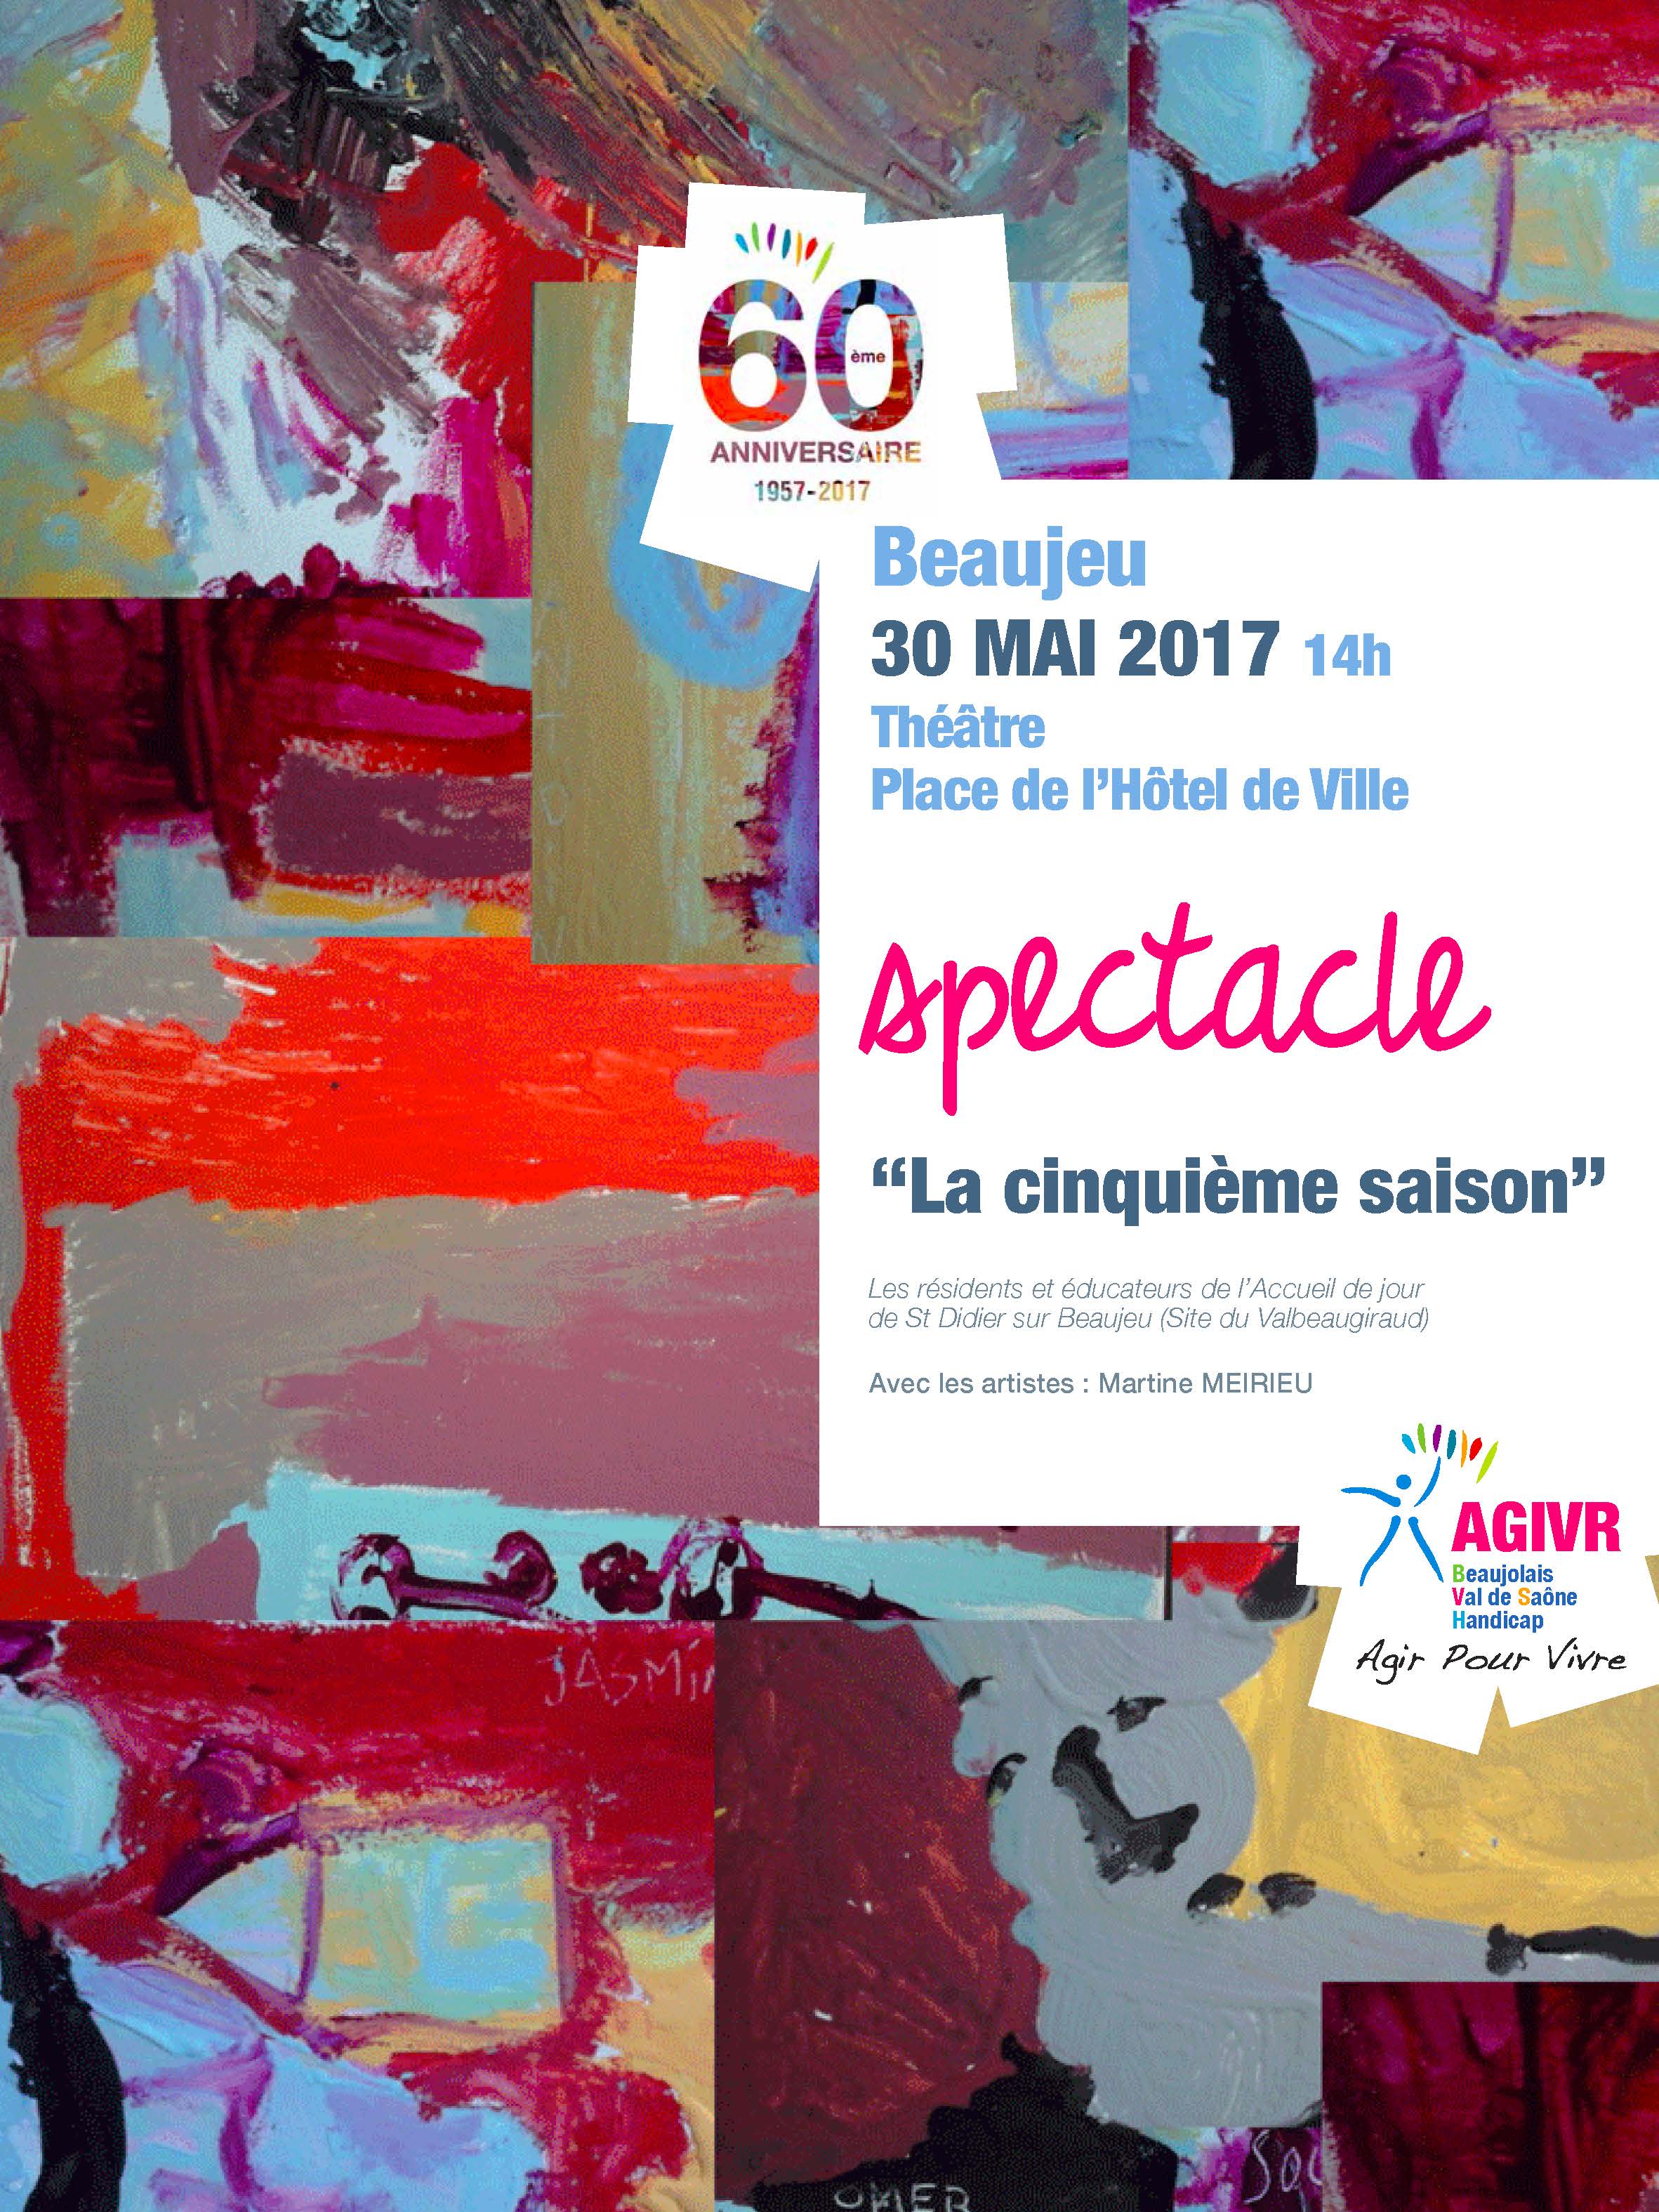 Affiche-AGIVR-60ans-30mai-beaujeu-theatre